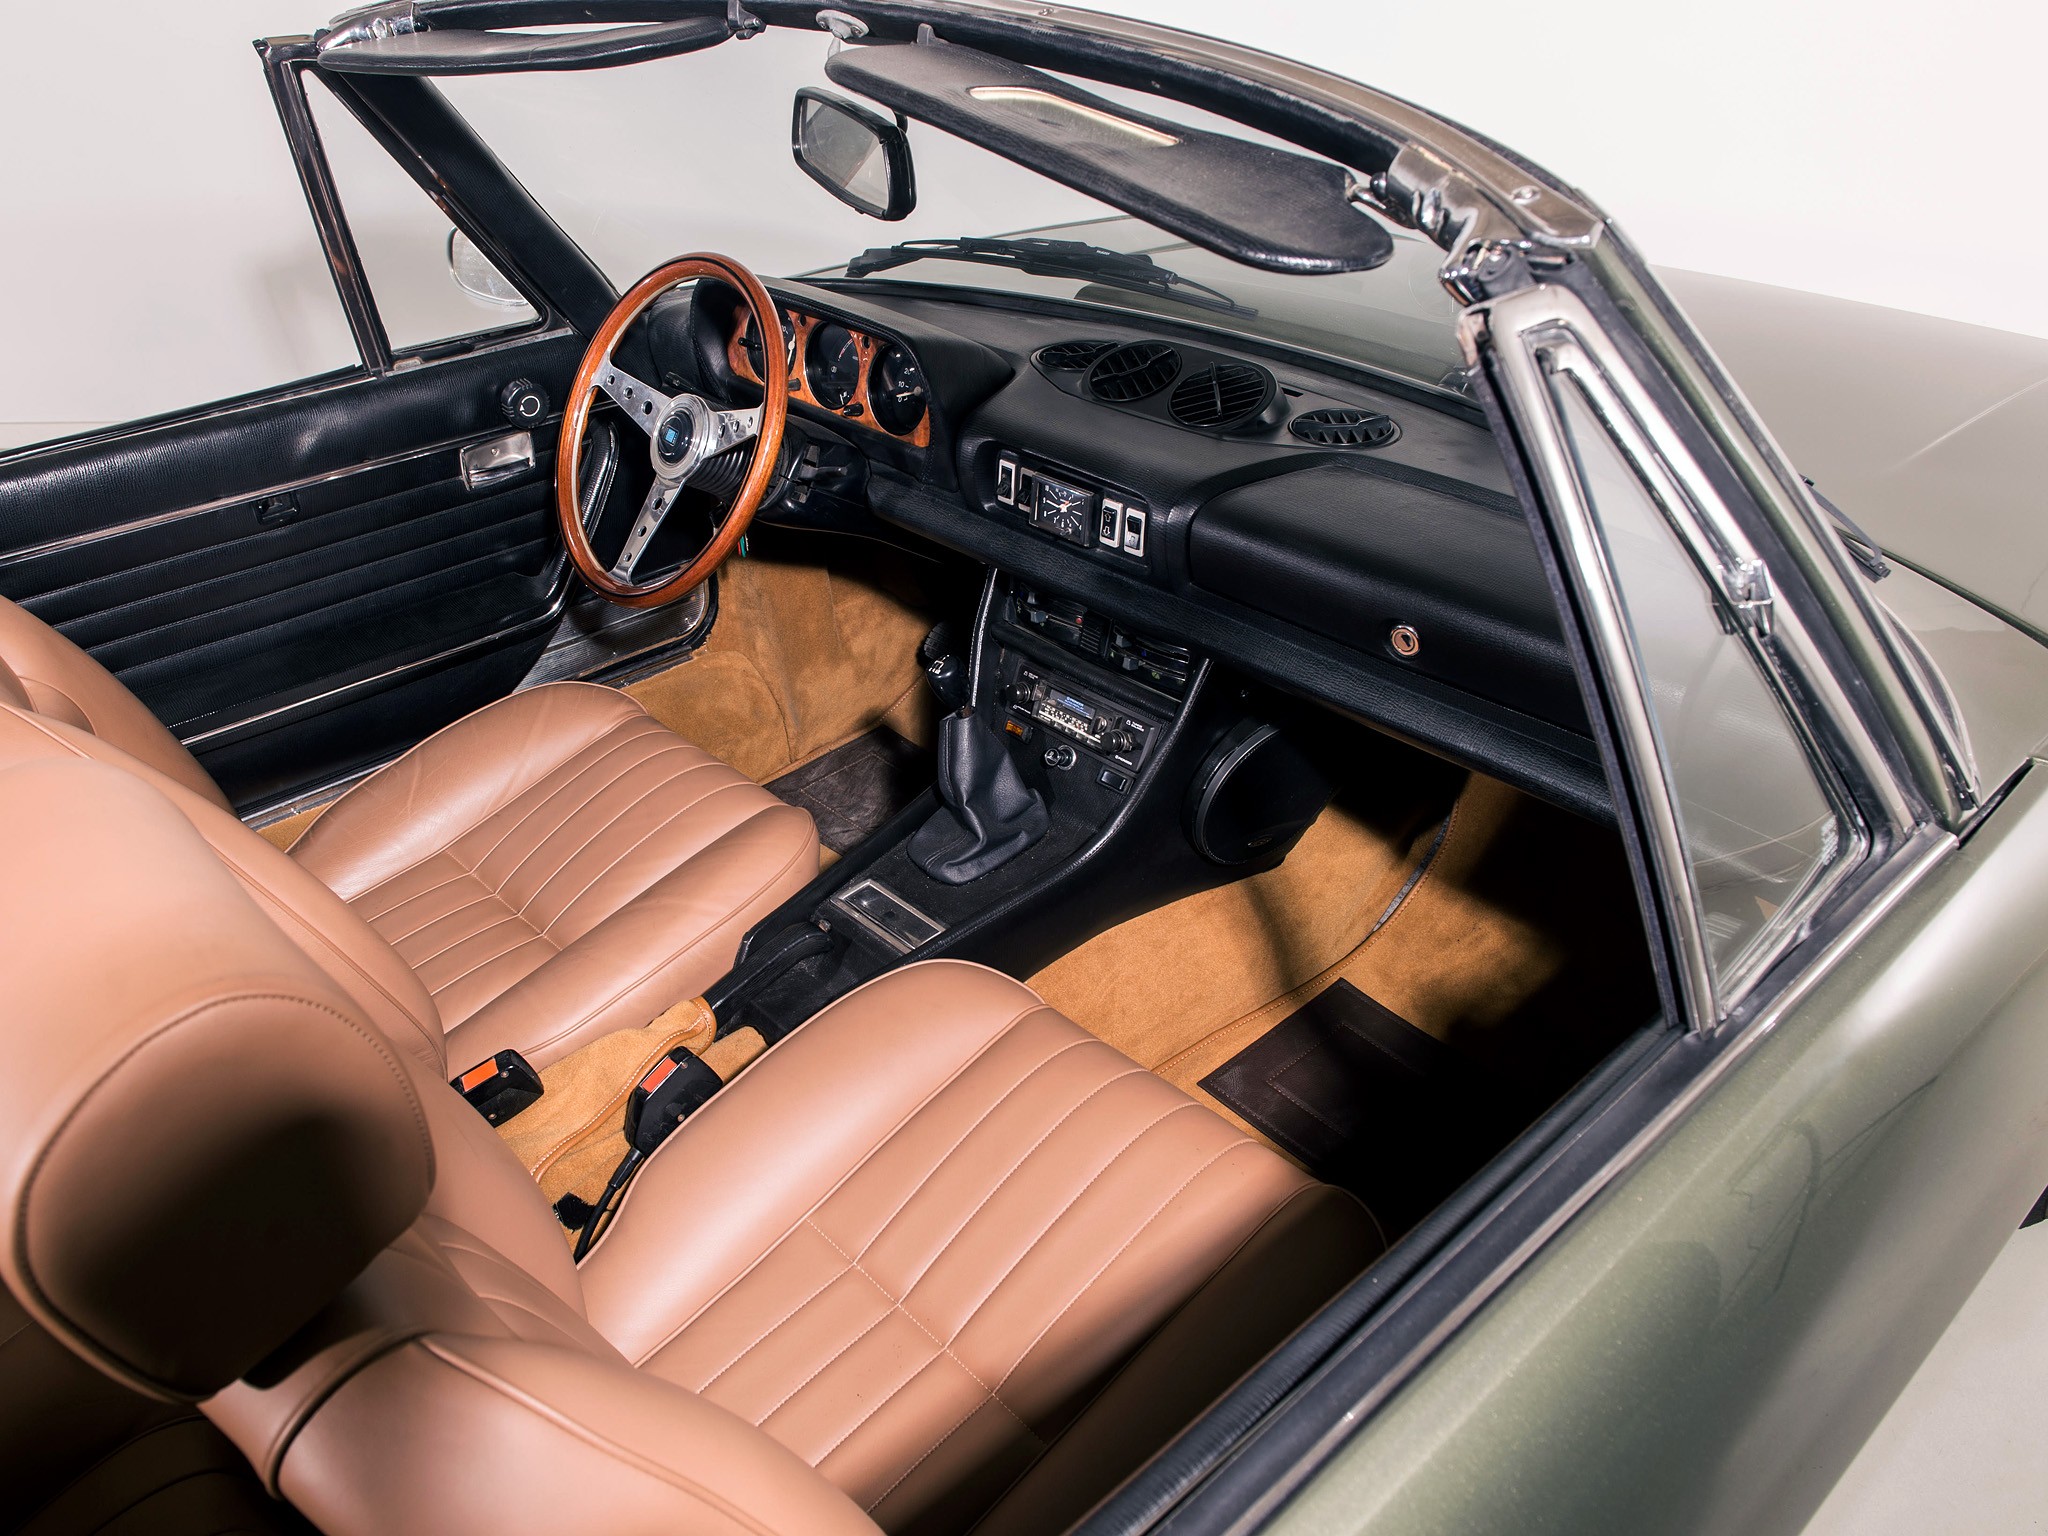 504 peugeot interior cabriolet coupe 1982 1974 1977 wallpaperup autoevolution cars conertible classic 1979